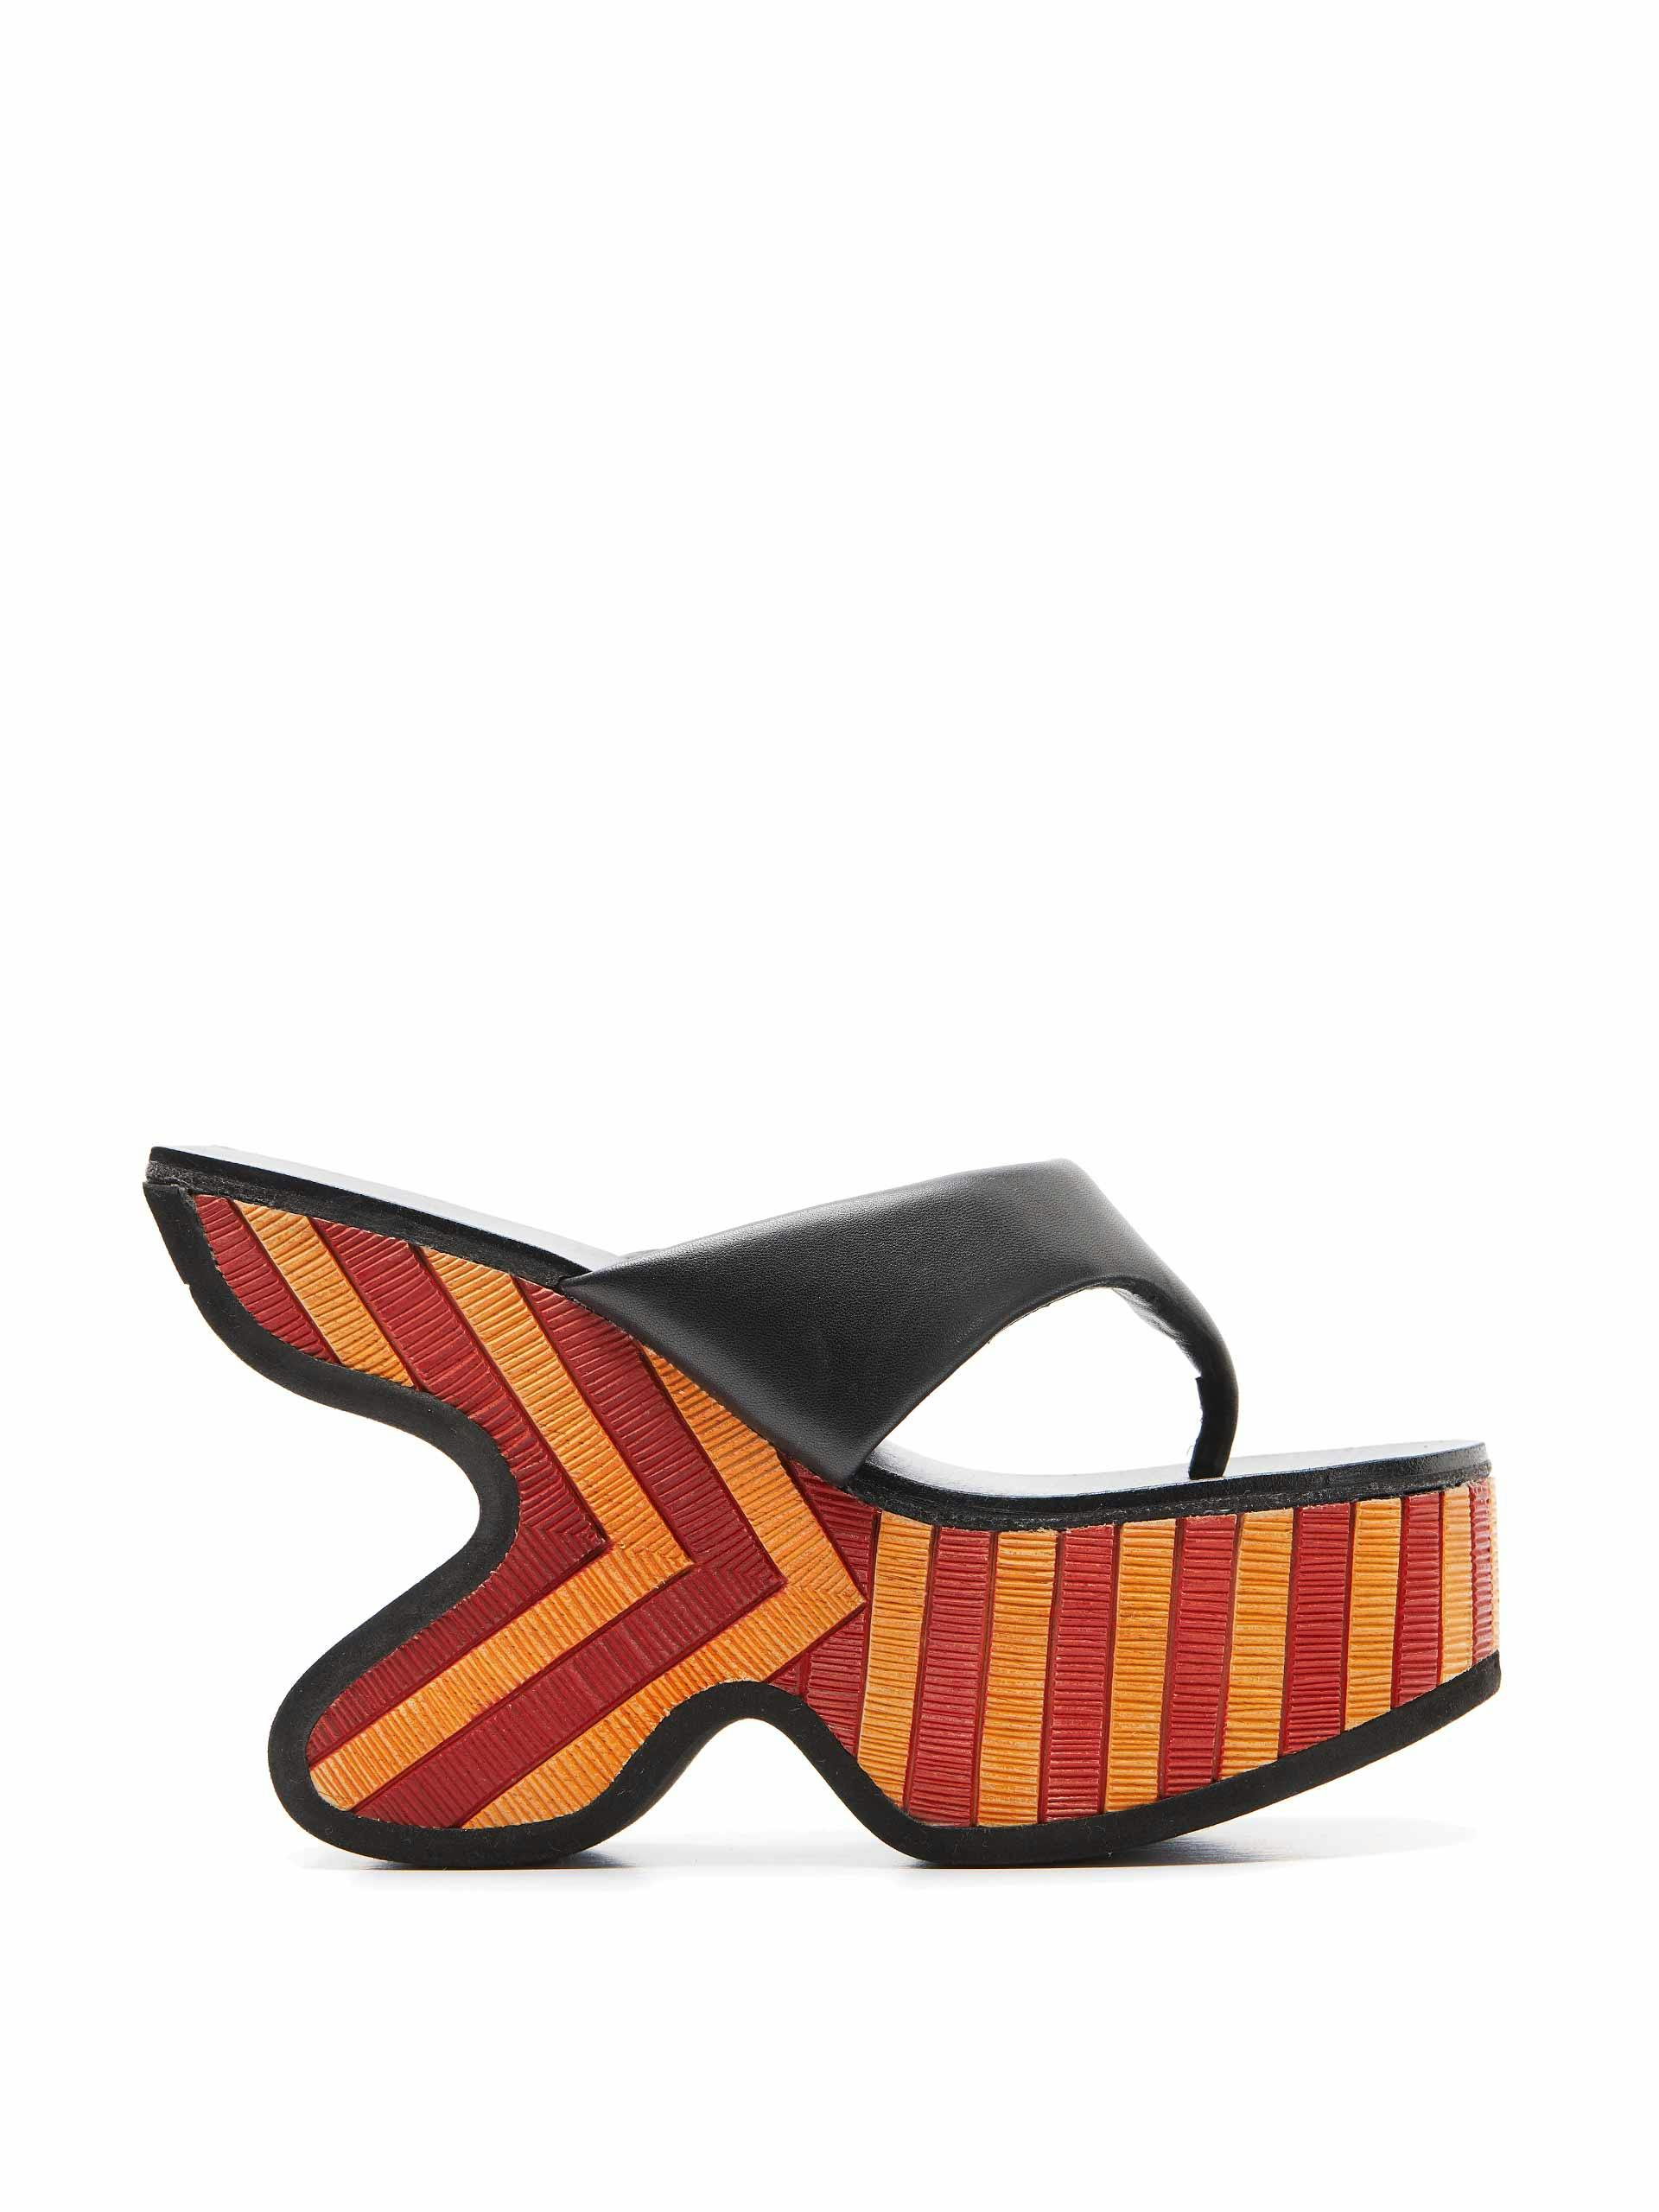 Irregular platform leather sandal